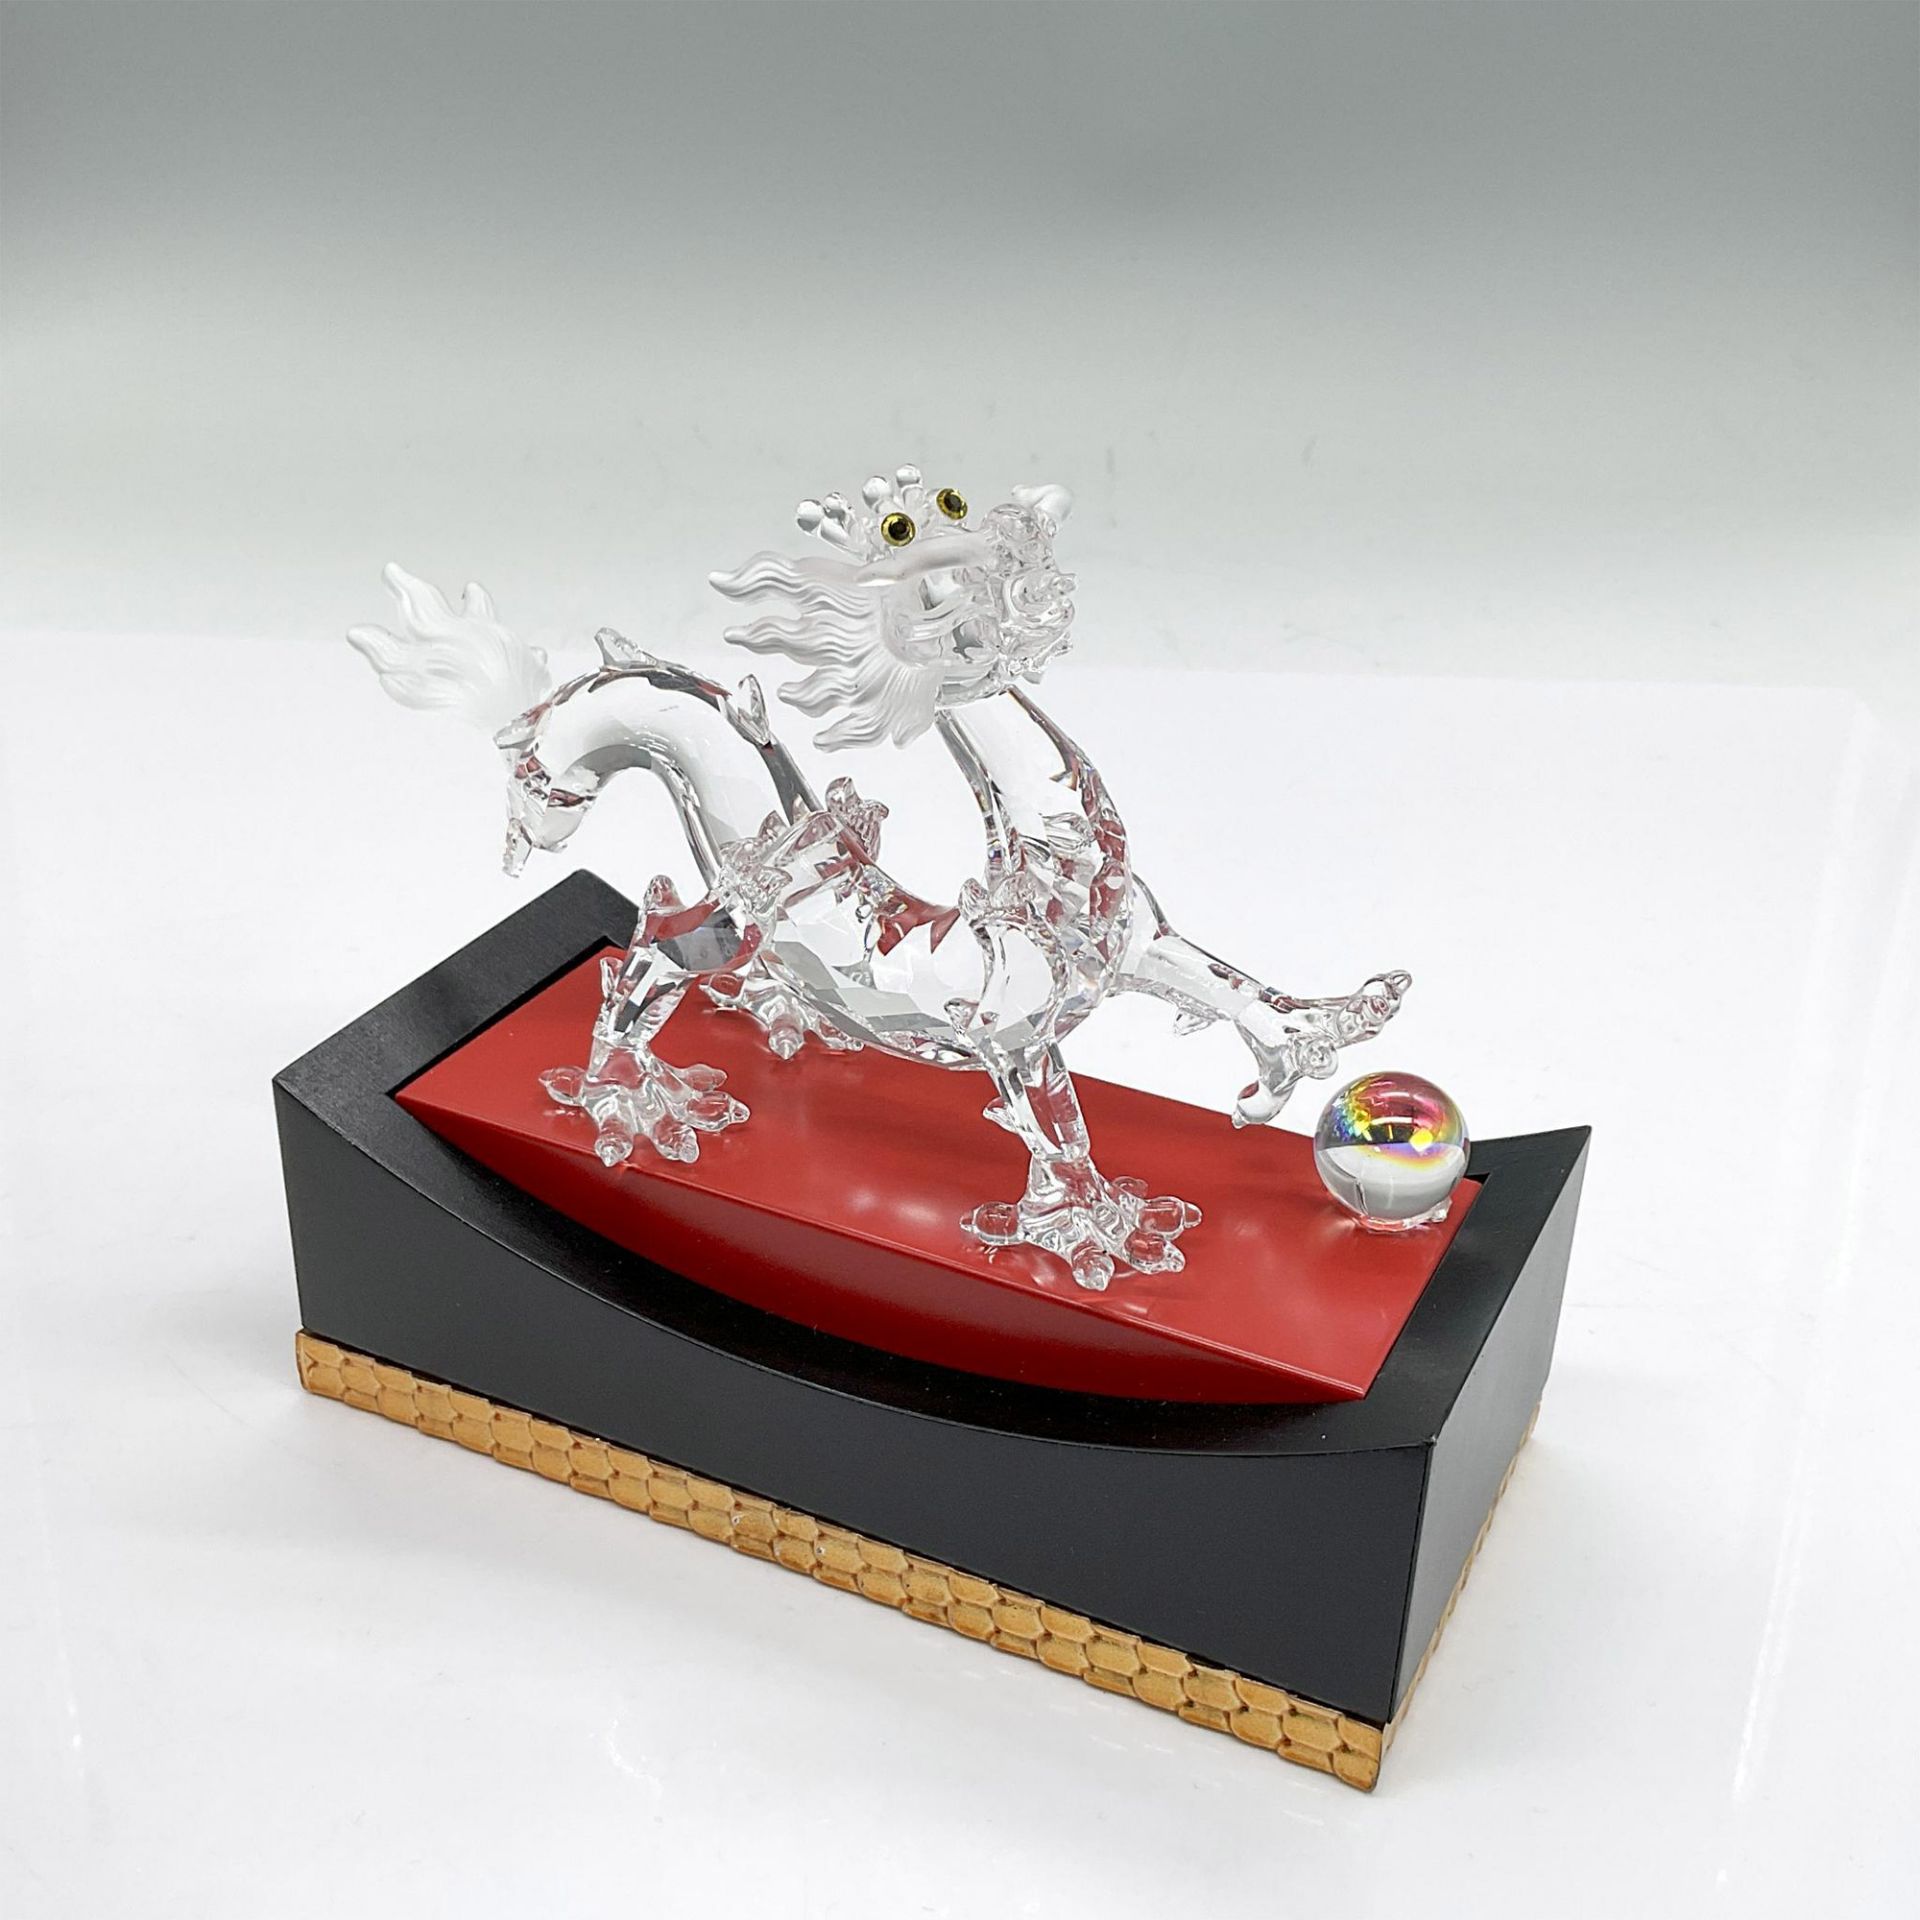 Swarovski Crystal Figurine, Chinese Zodiac Dragon + Base - Image 2 of 5